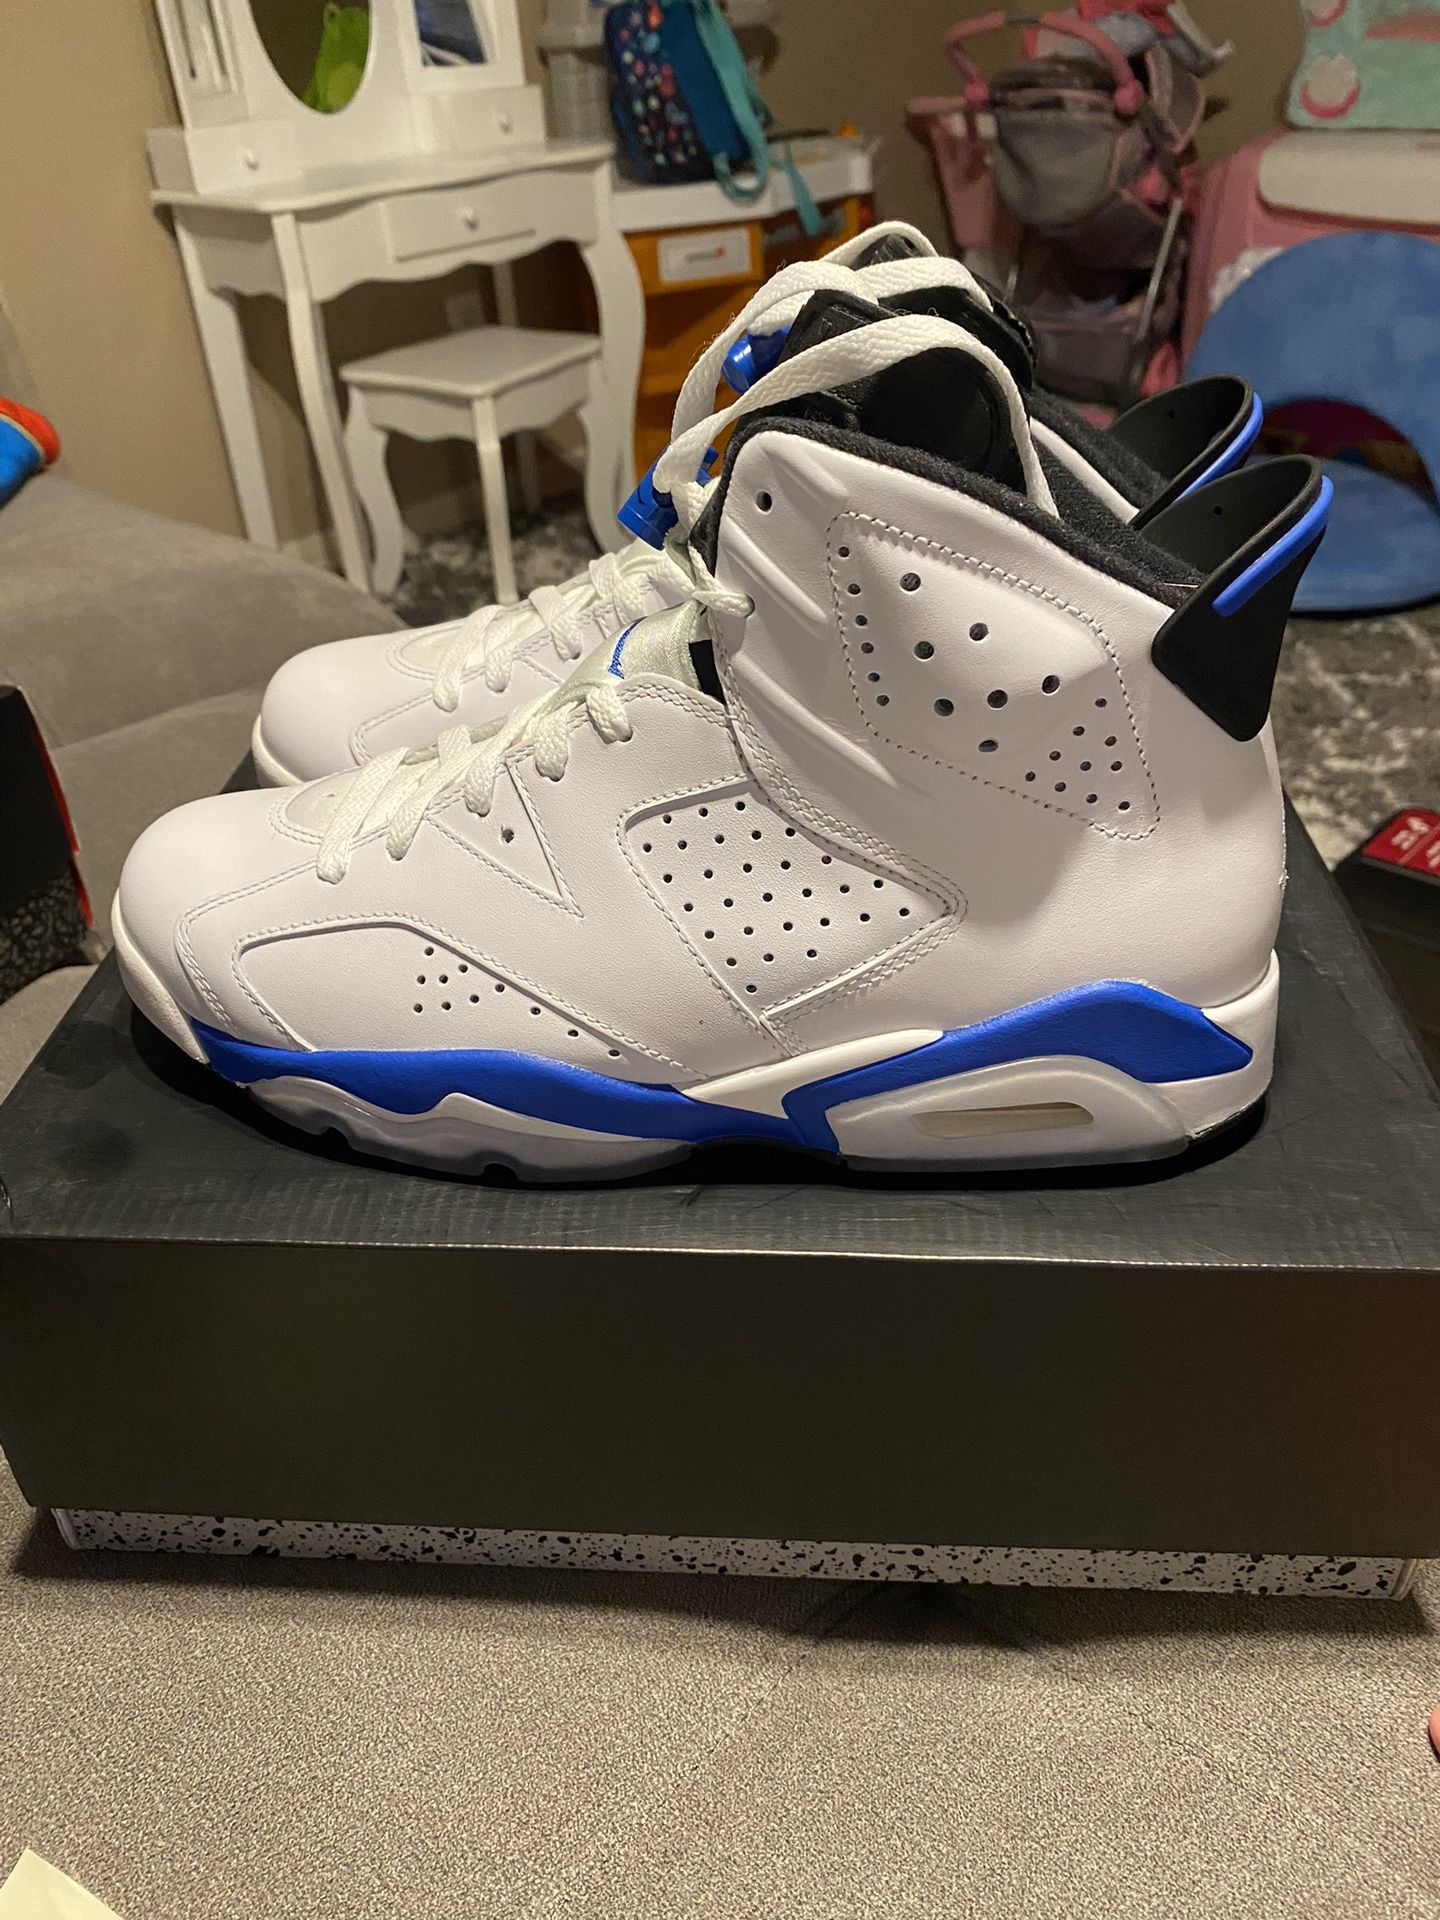 Jordan Retro 6 “Sport Blue” Size 9